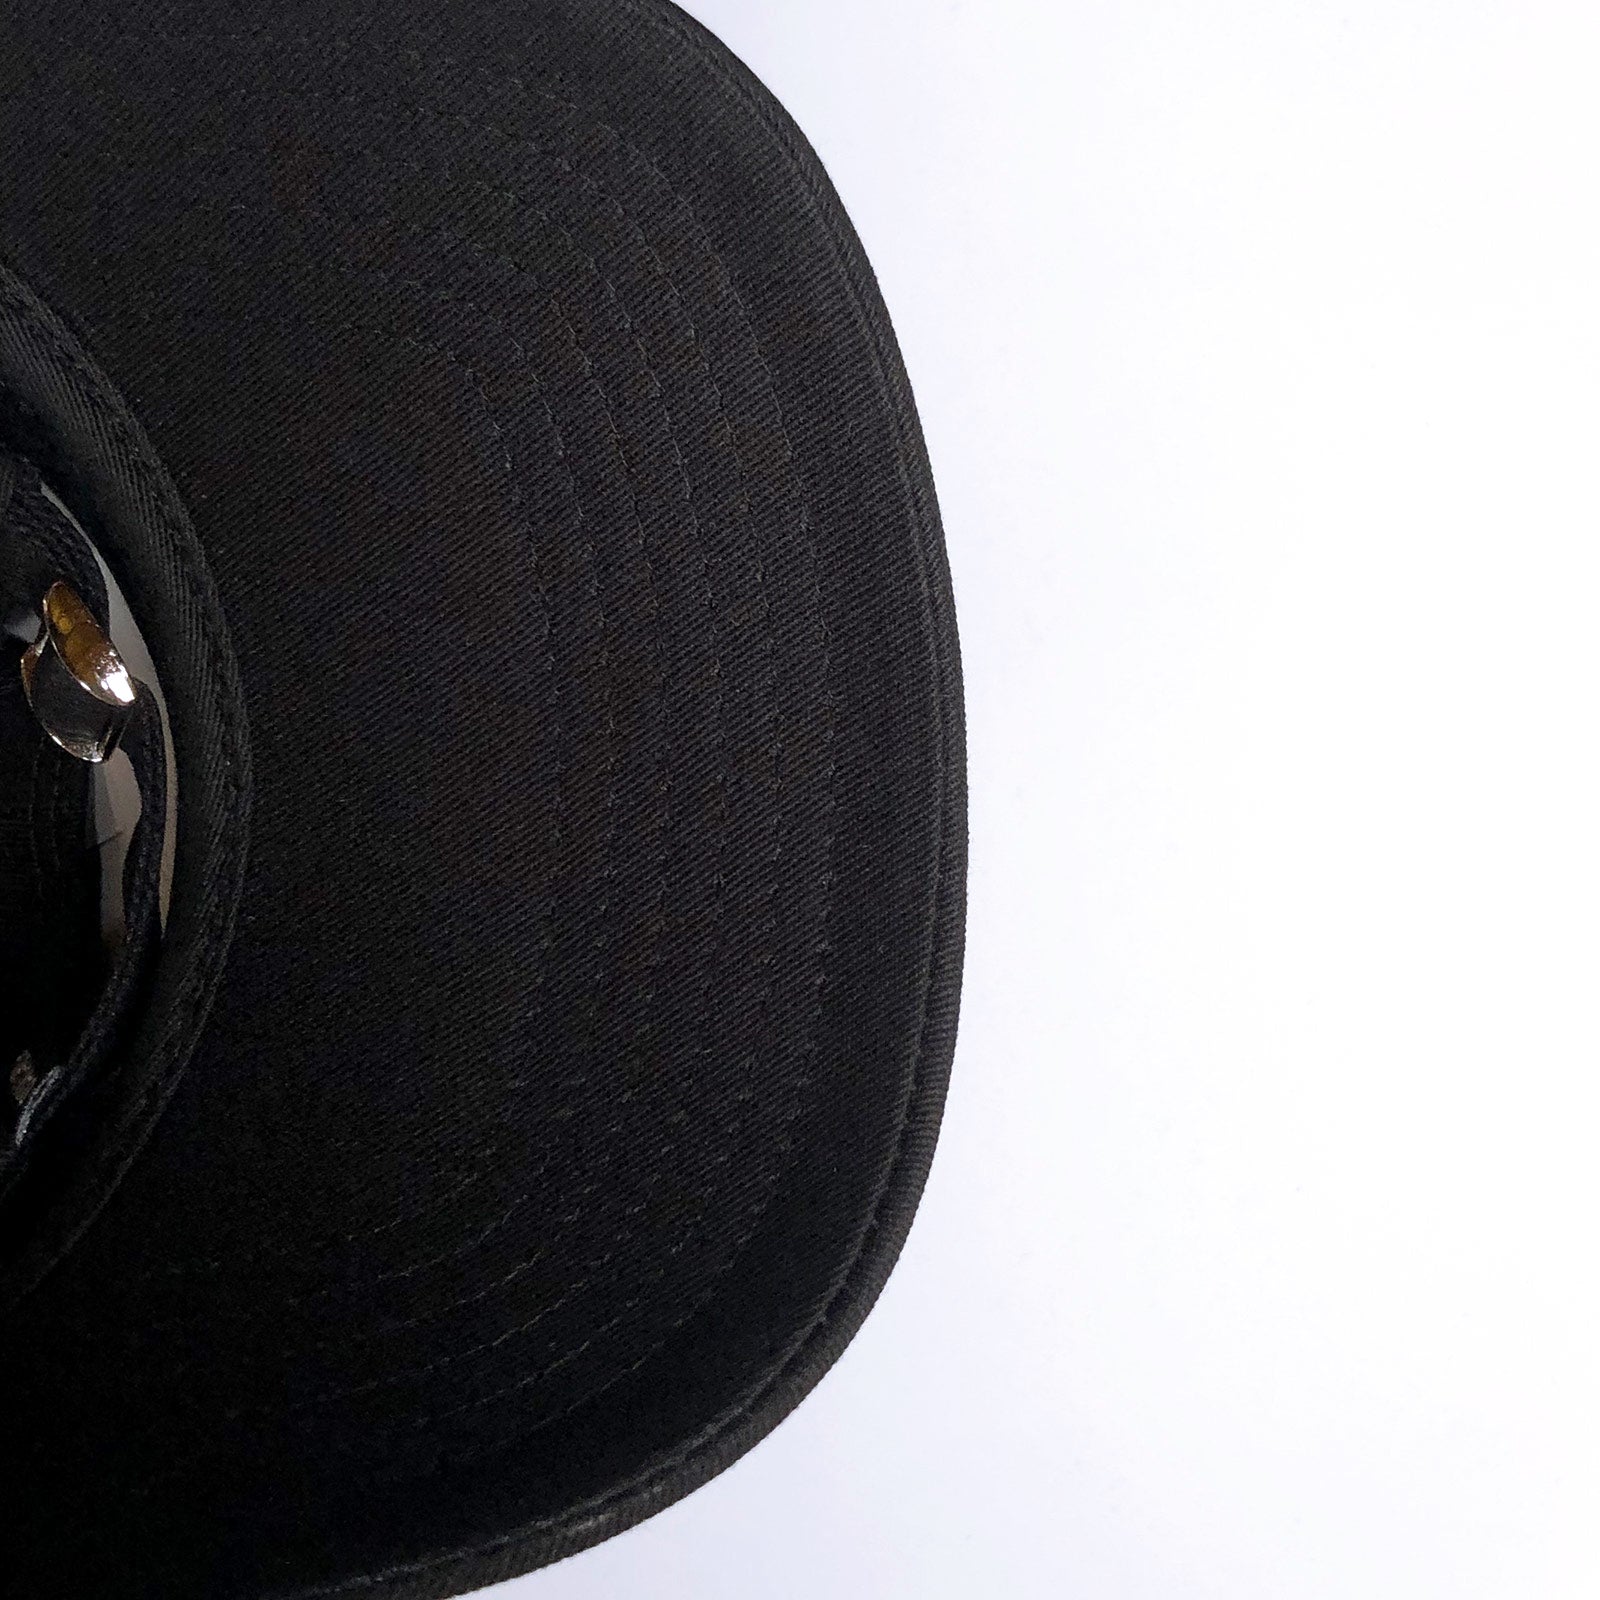 Black under visor on black dad cap.